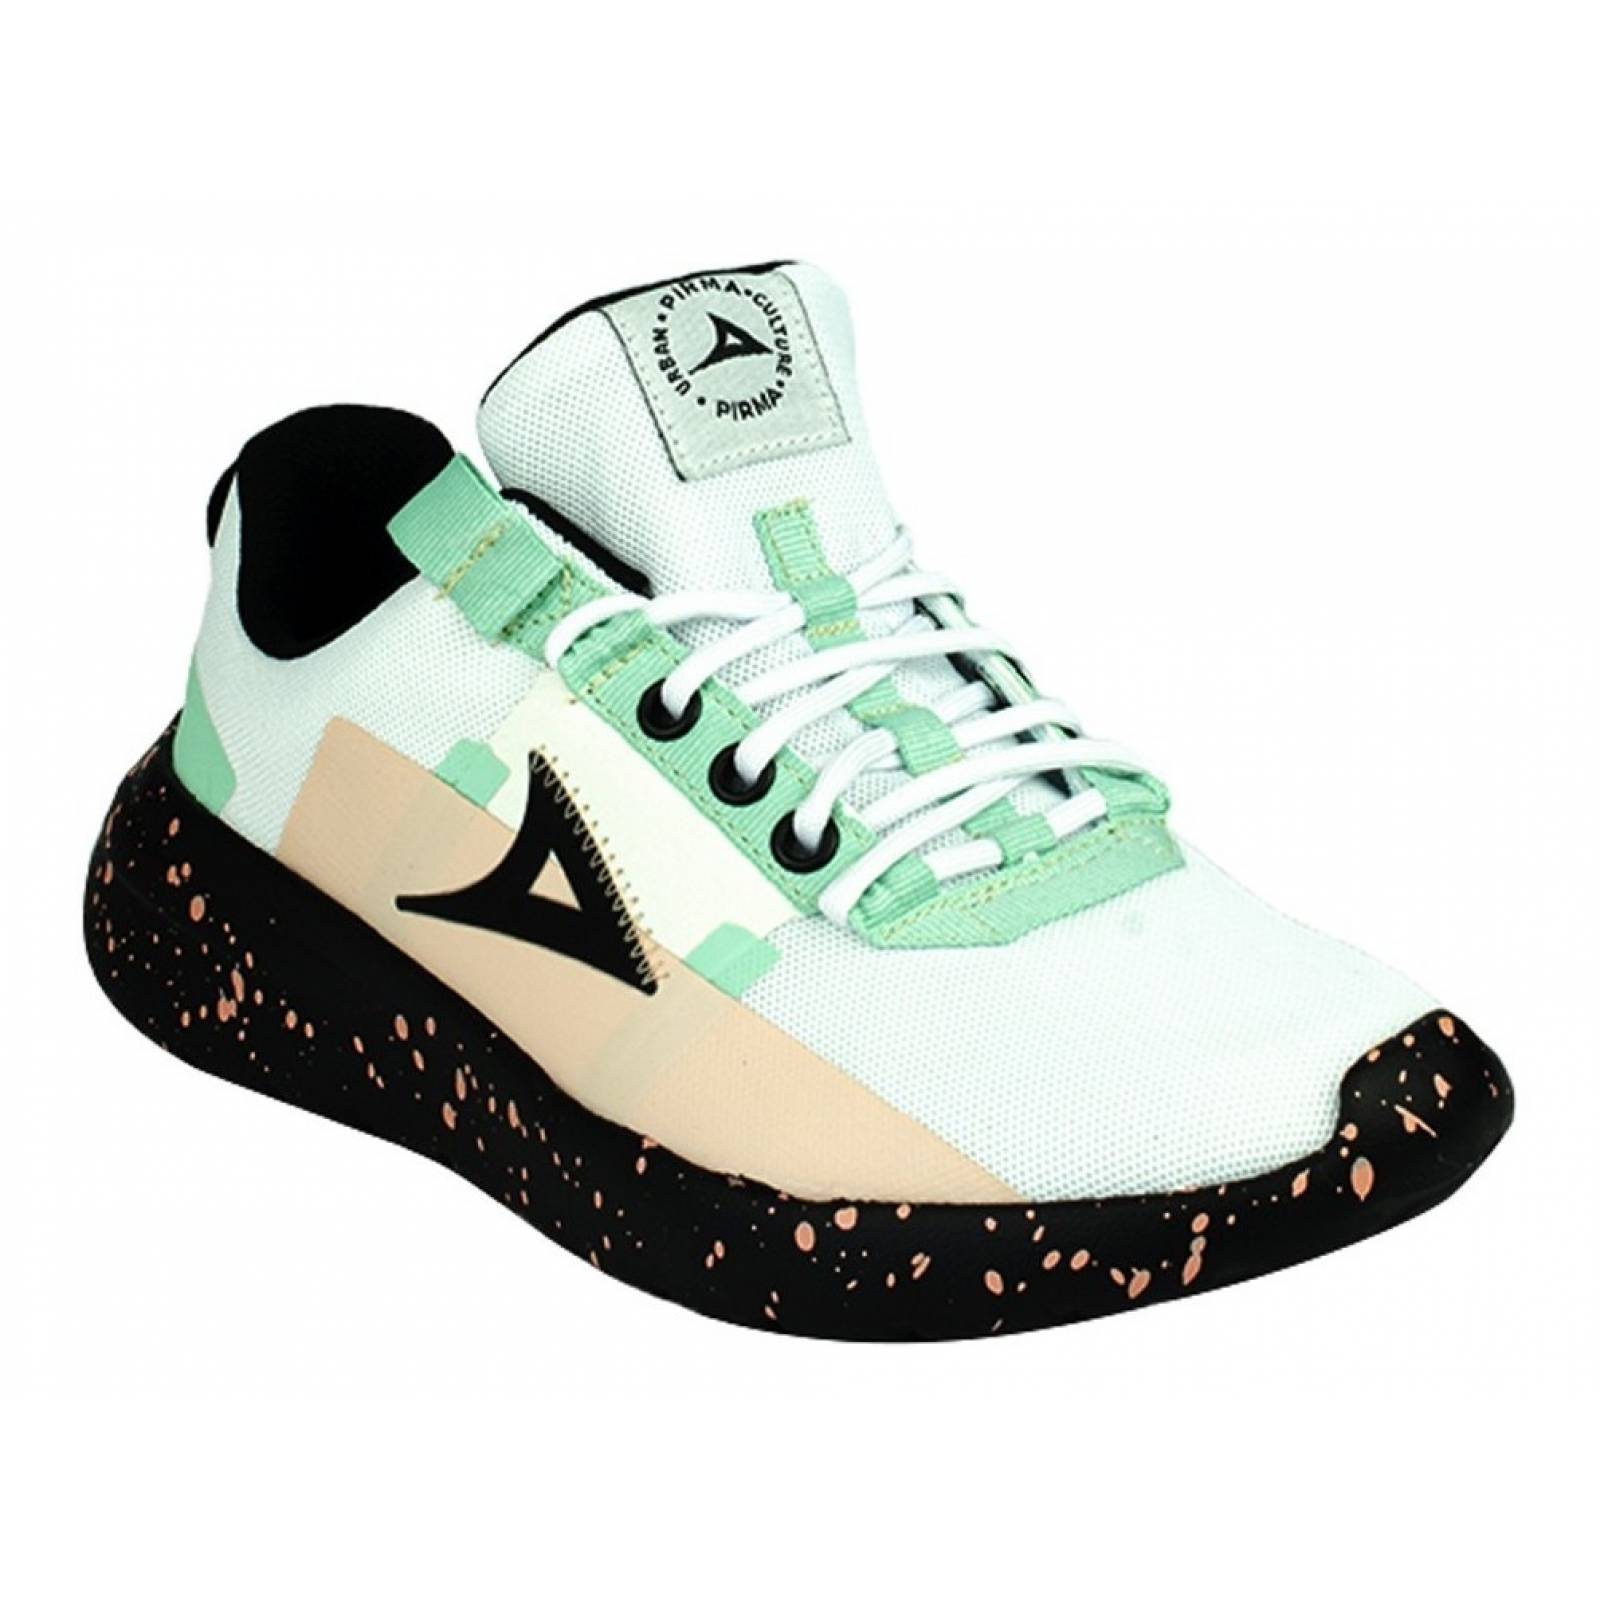 Pirma Tenis Sneakers Confort Ligero Multicolor Mujer 83996